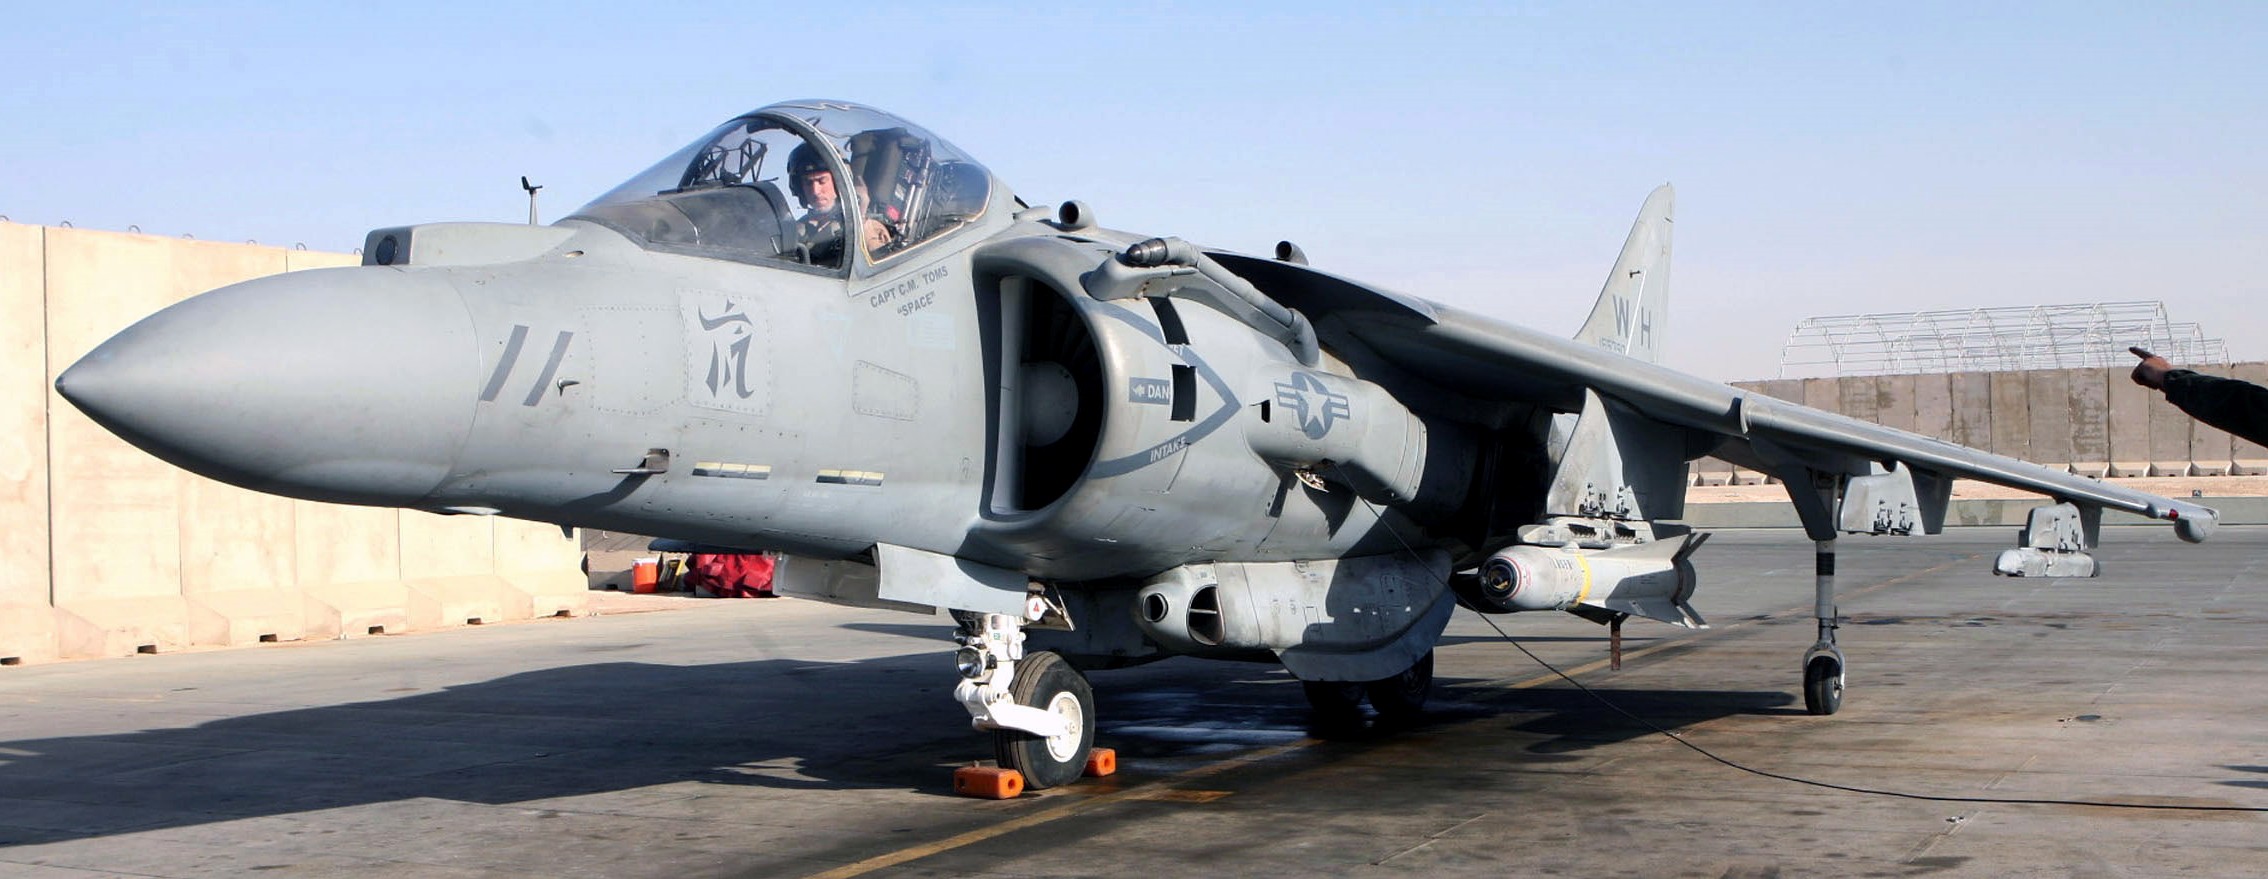 vma-542 tigers marine attack squadron usmc av-8b harrier ii al asad airbase iraq 43